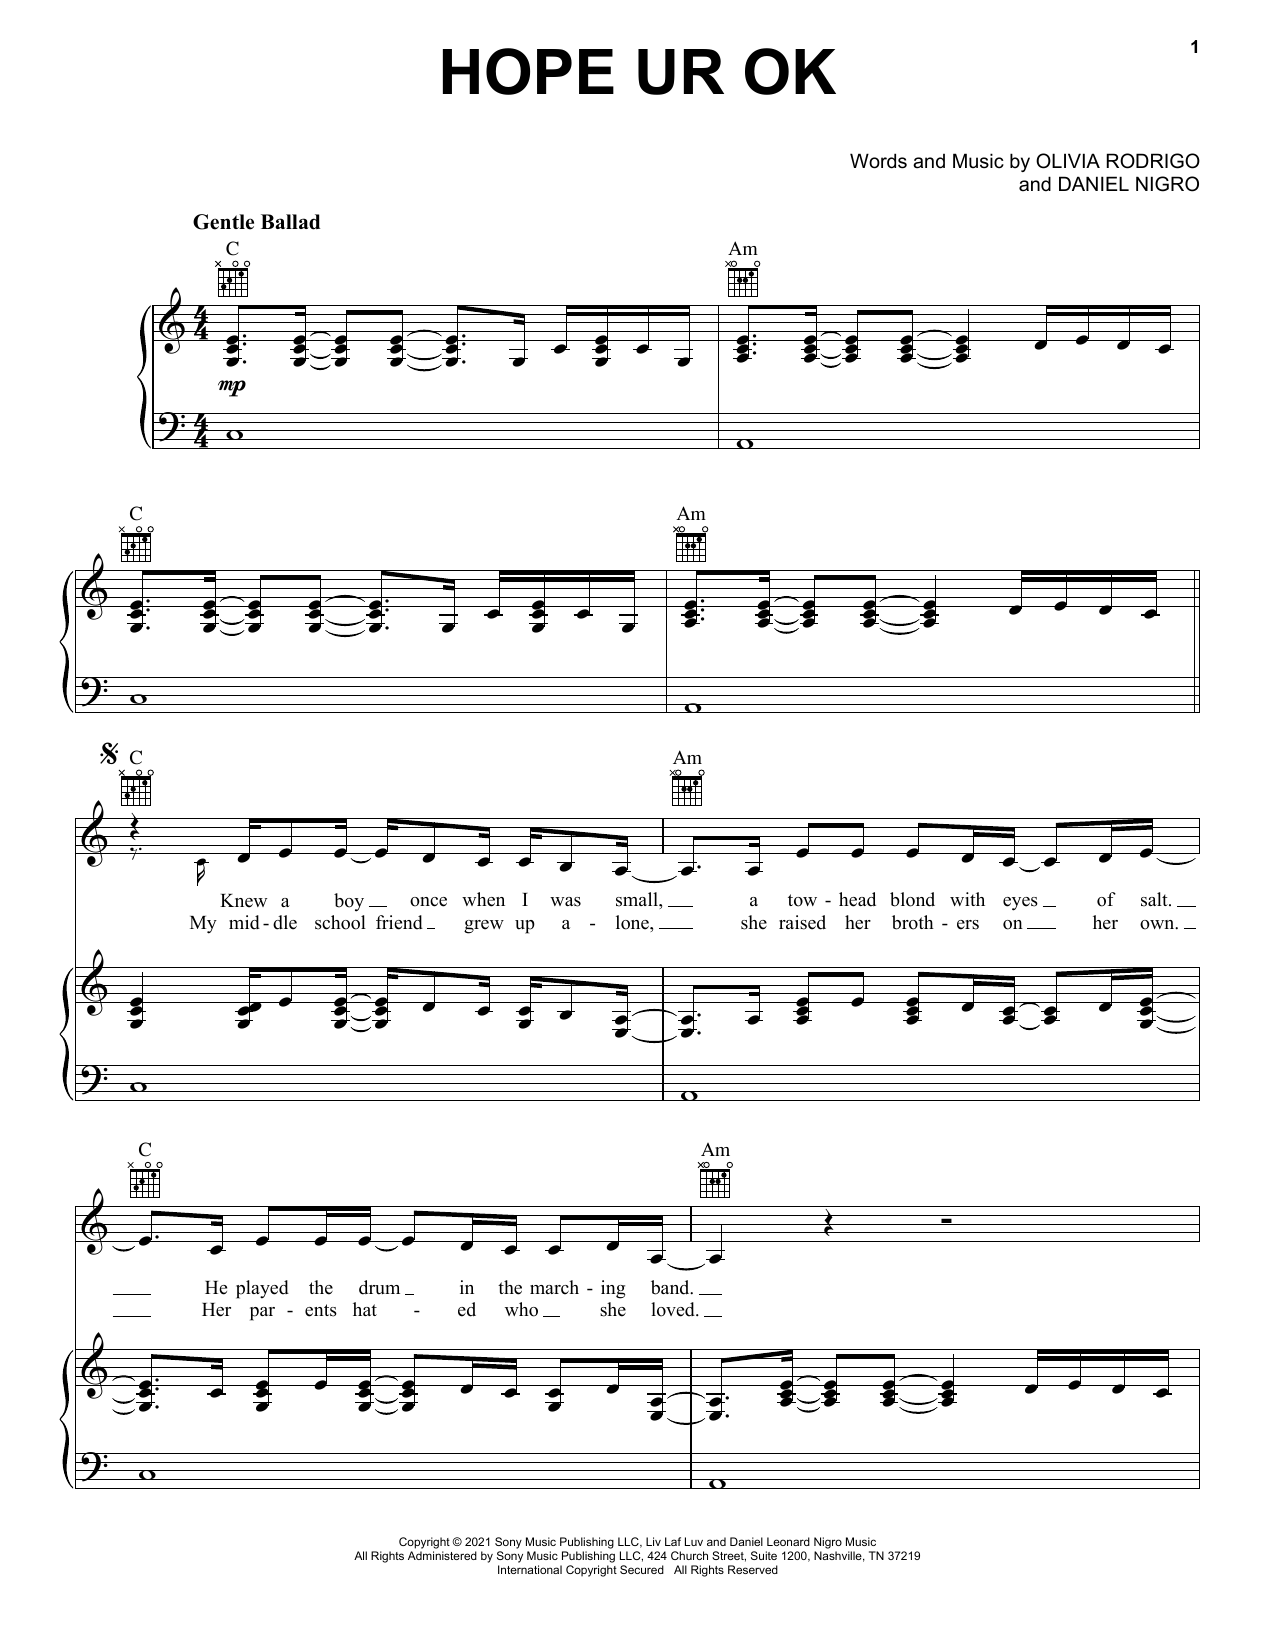 Olivia Rodrigo hope ur ok Sheet Music Notes & Chords for Ukulele - Download or Print PDF